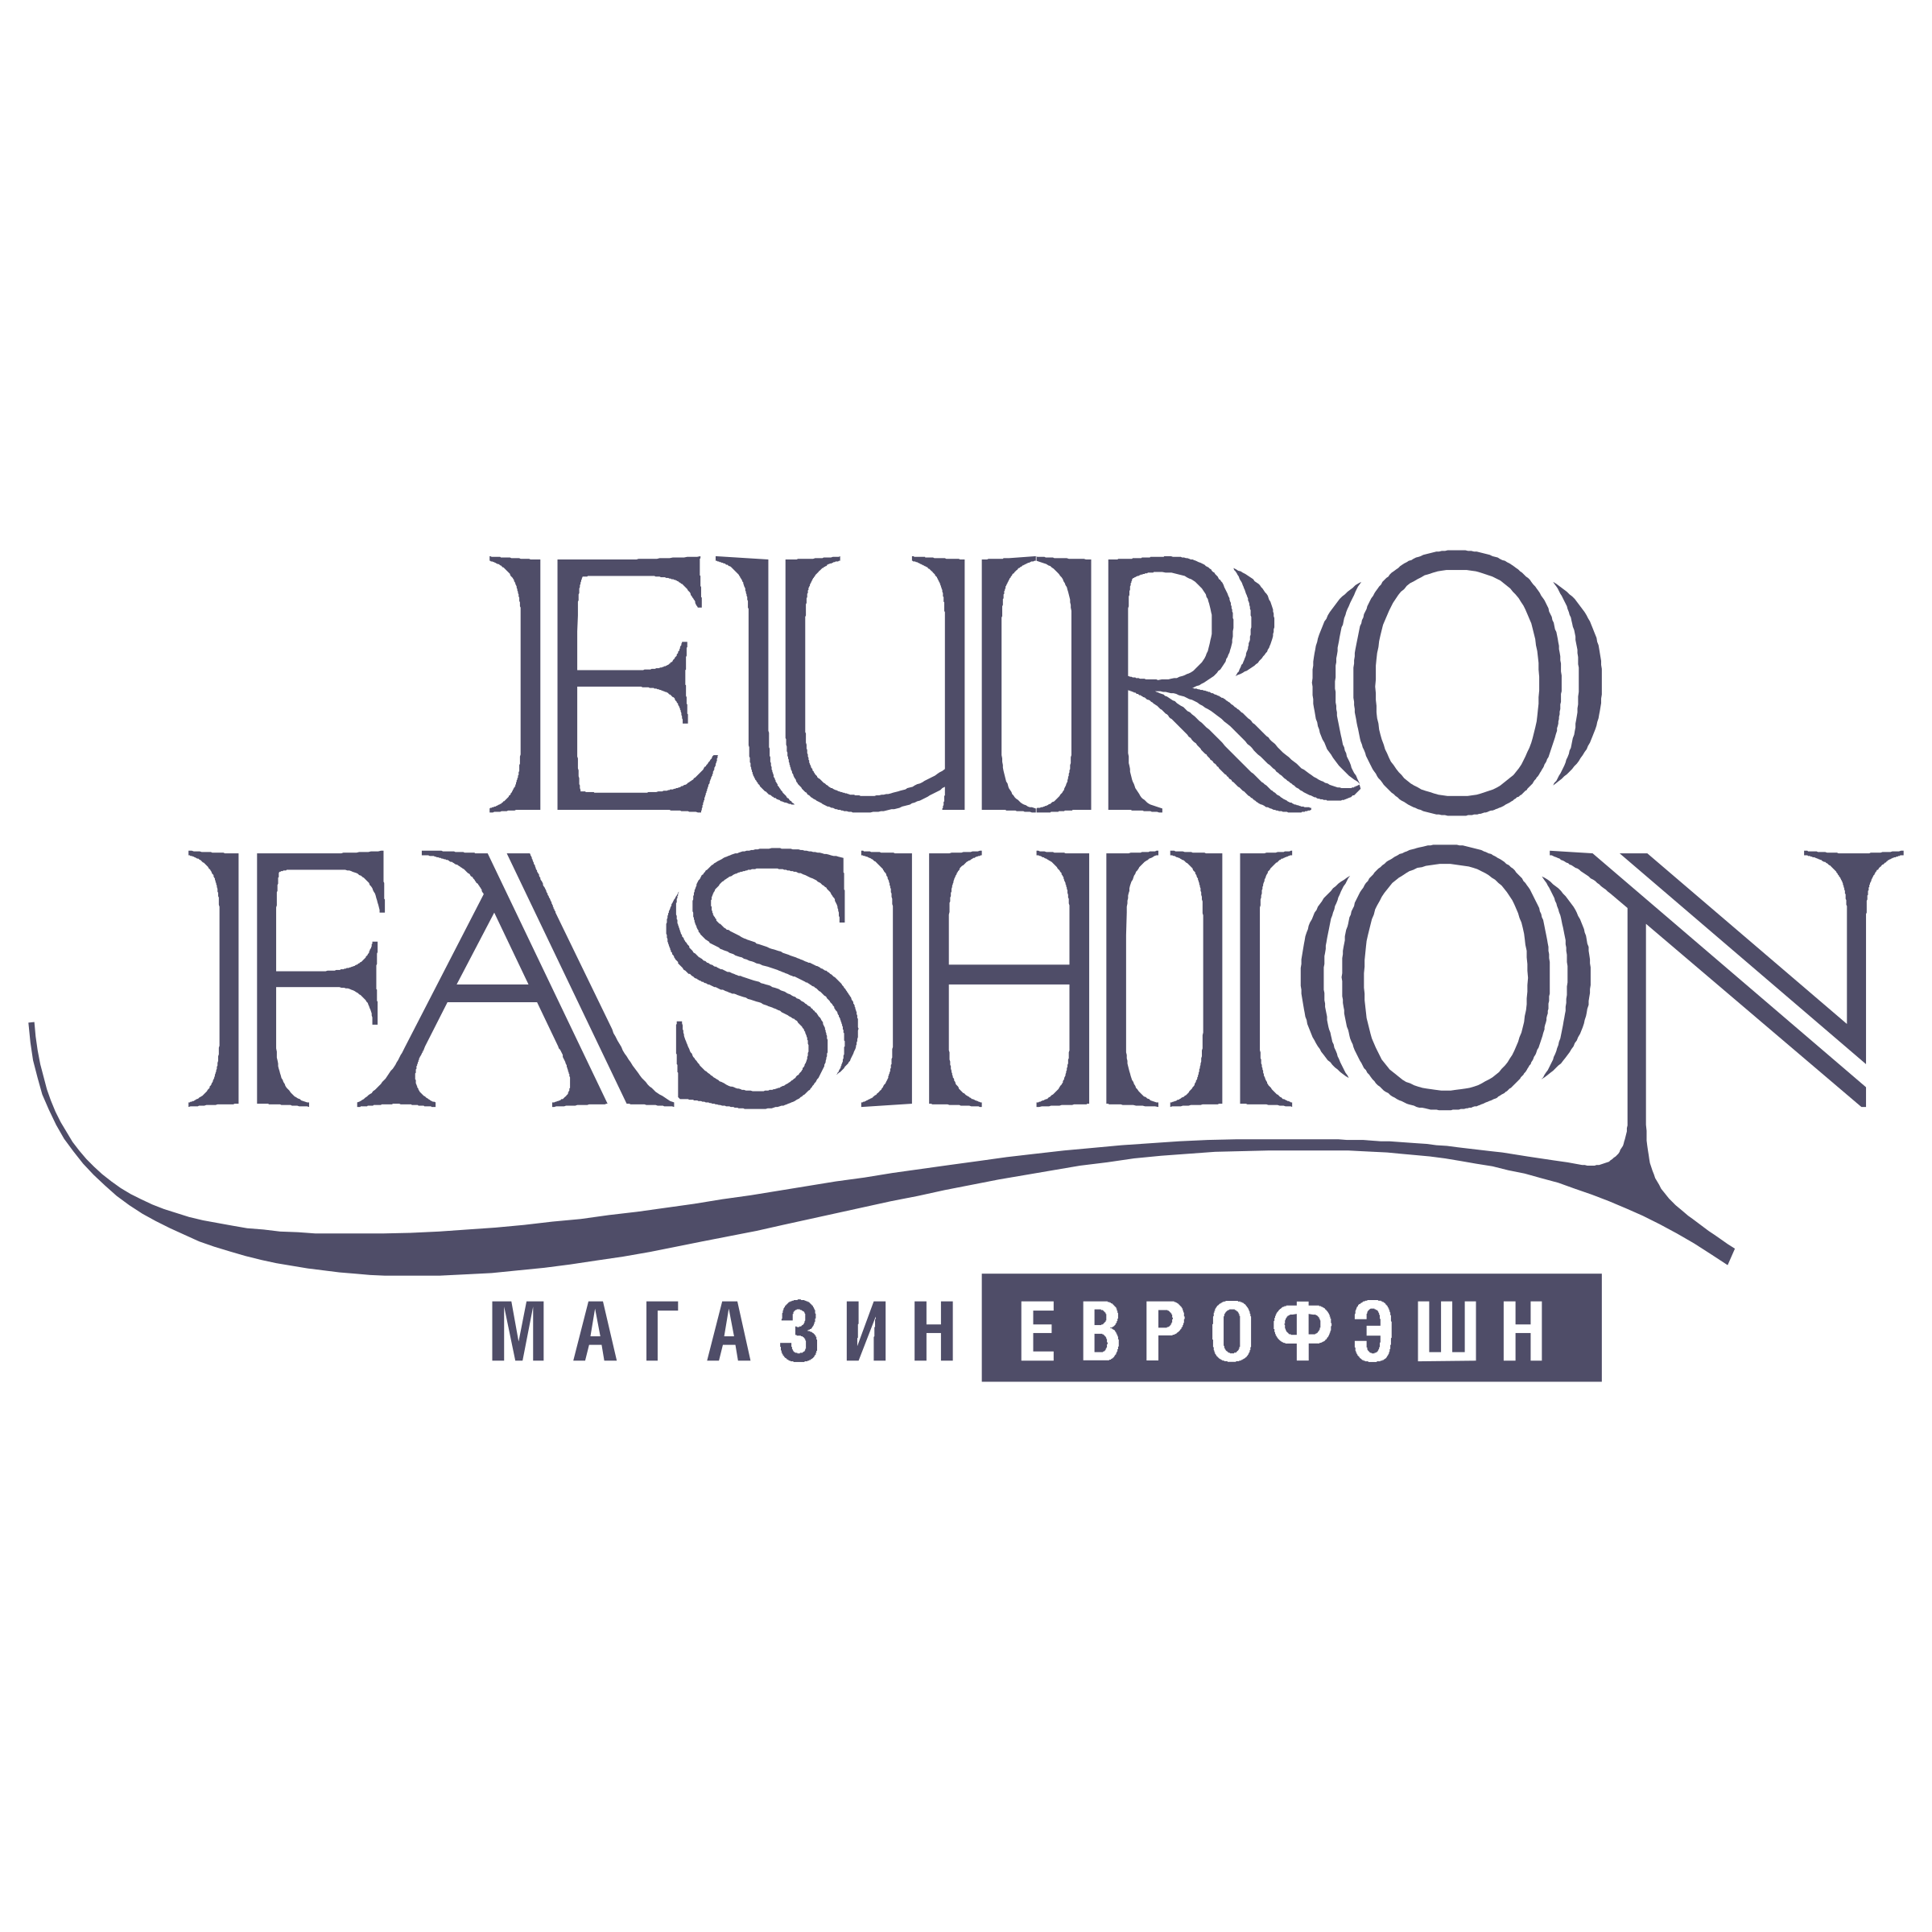 Transparent Fashion Logo - Euro Fashion Logo PNG Transparent & SVG Vector - Freebie Supply